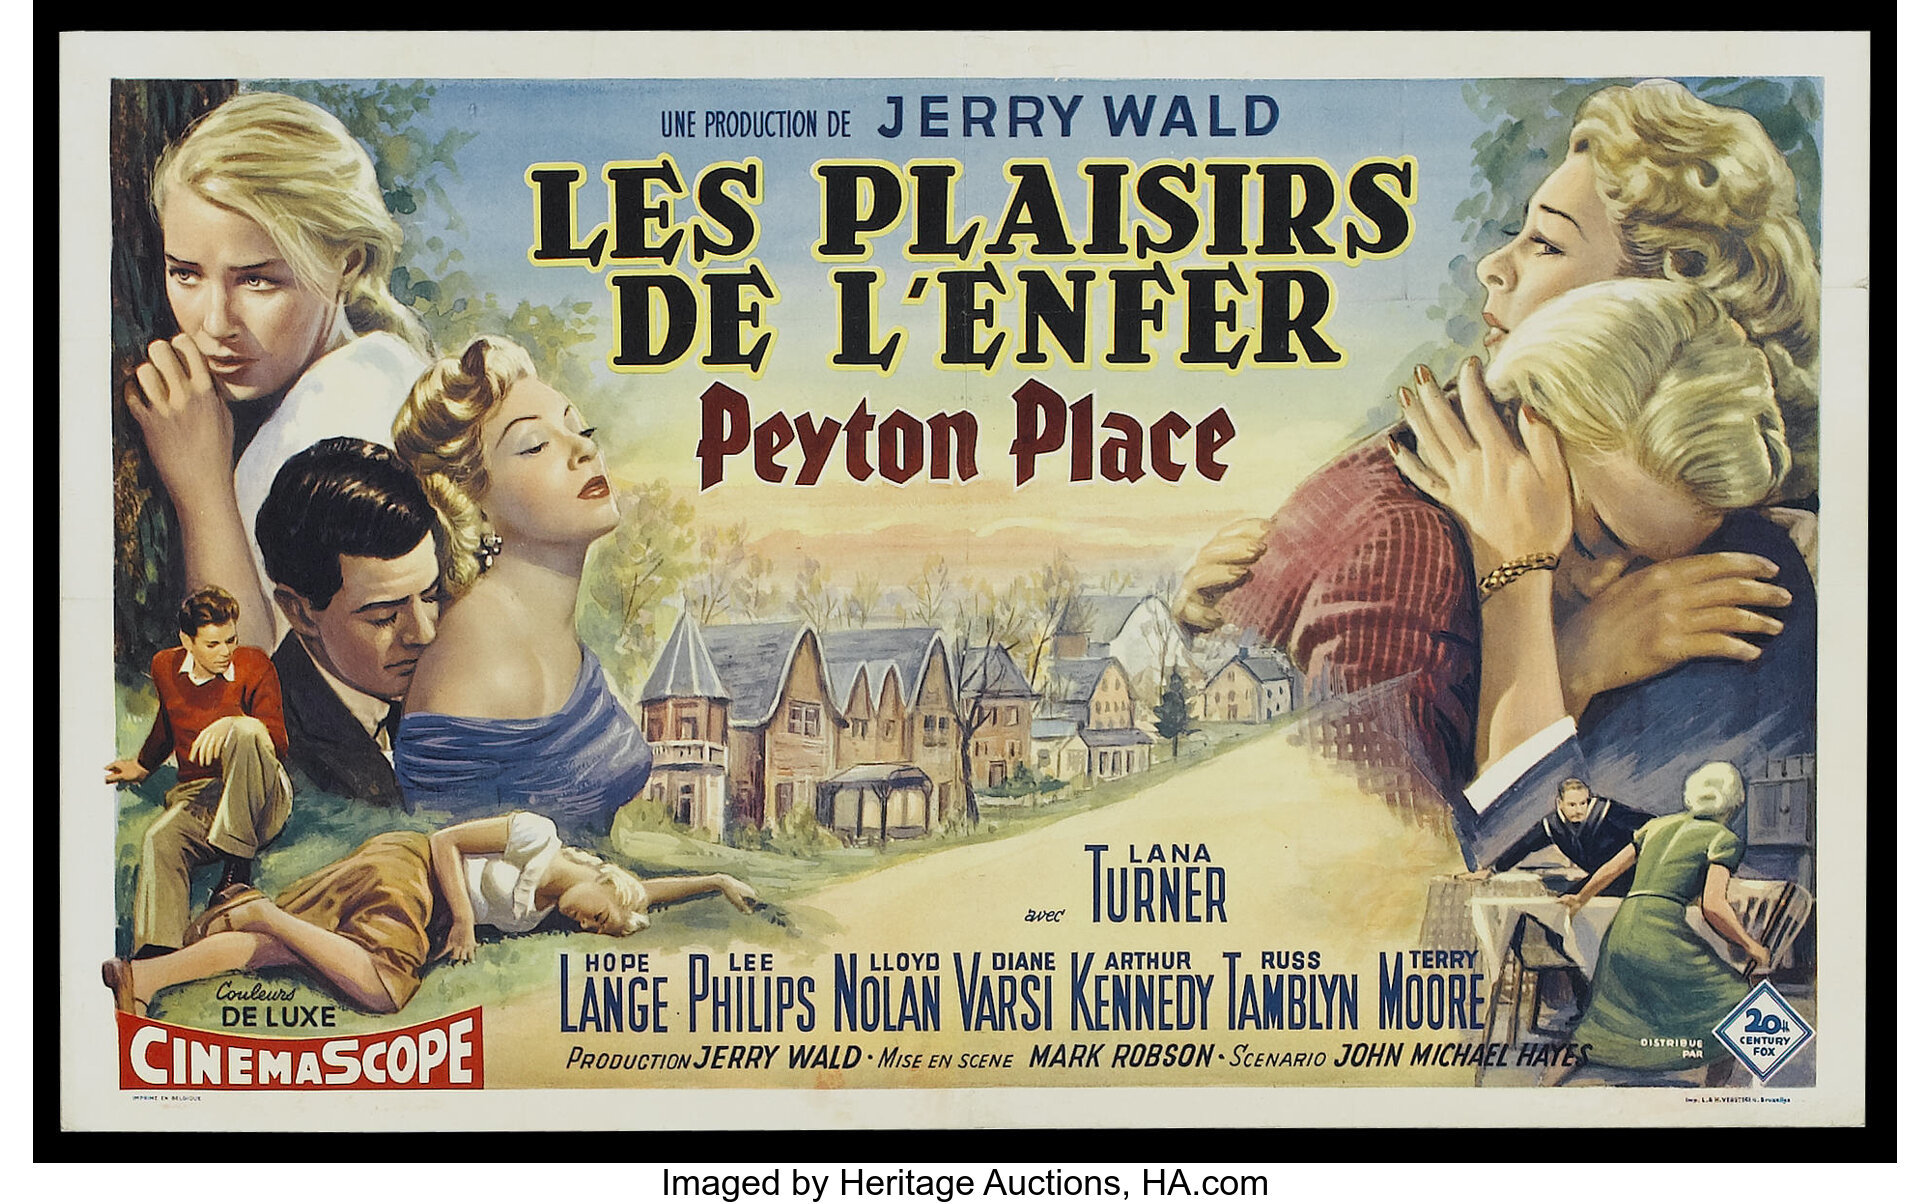 Peyton Place (1957) – Drama, Romance